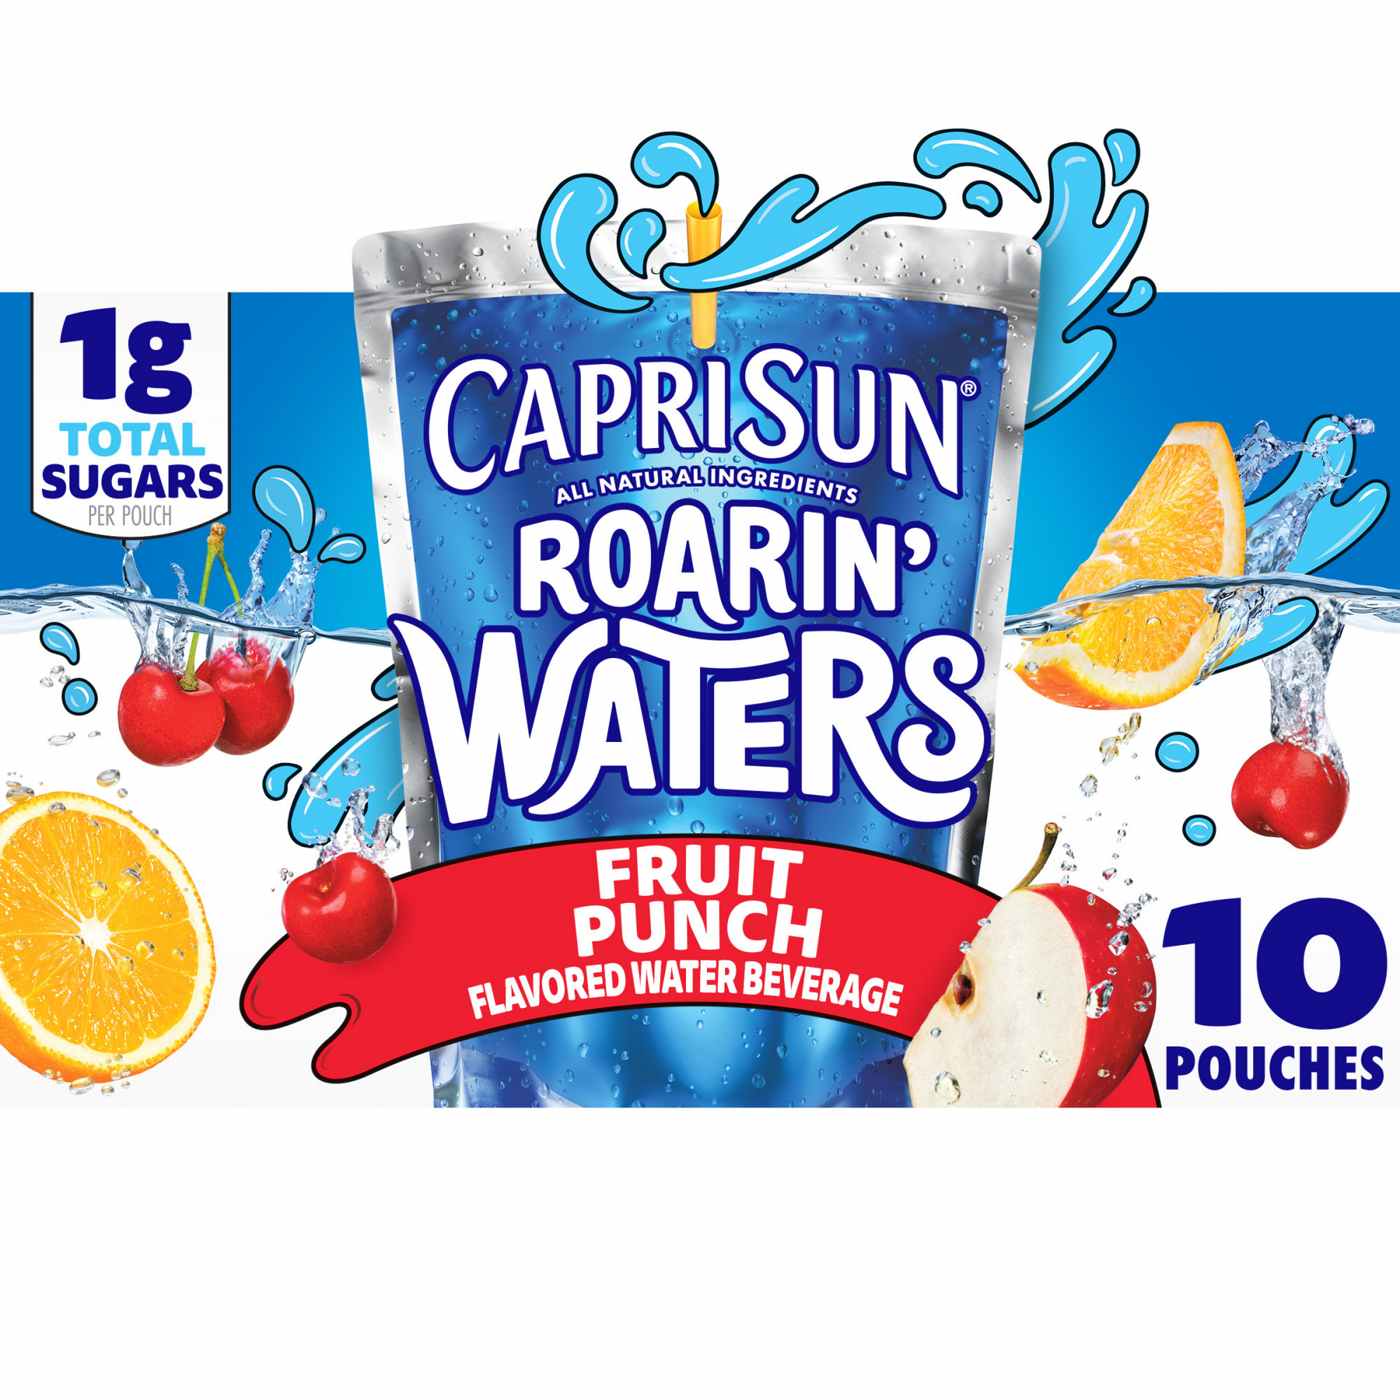 Capri Sun Roarin' Waters Fruit Punch Flavored Water Beverage 6 oz